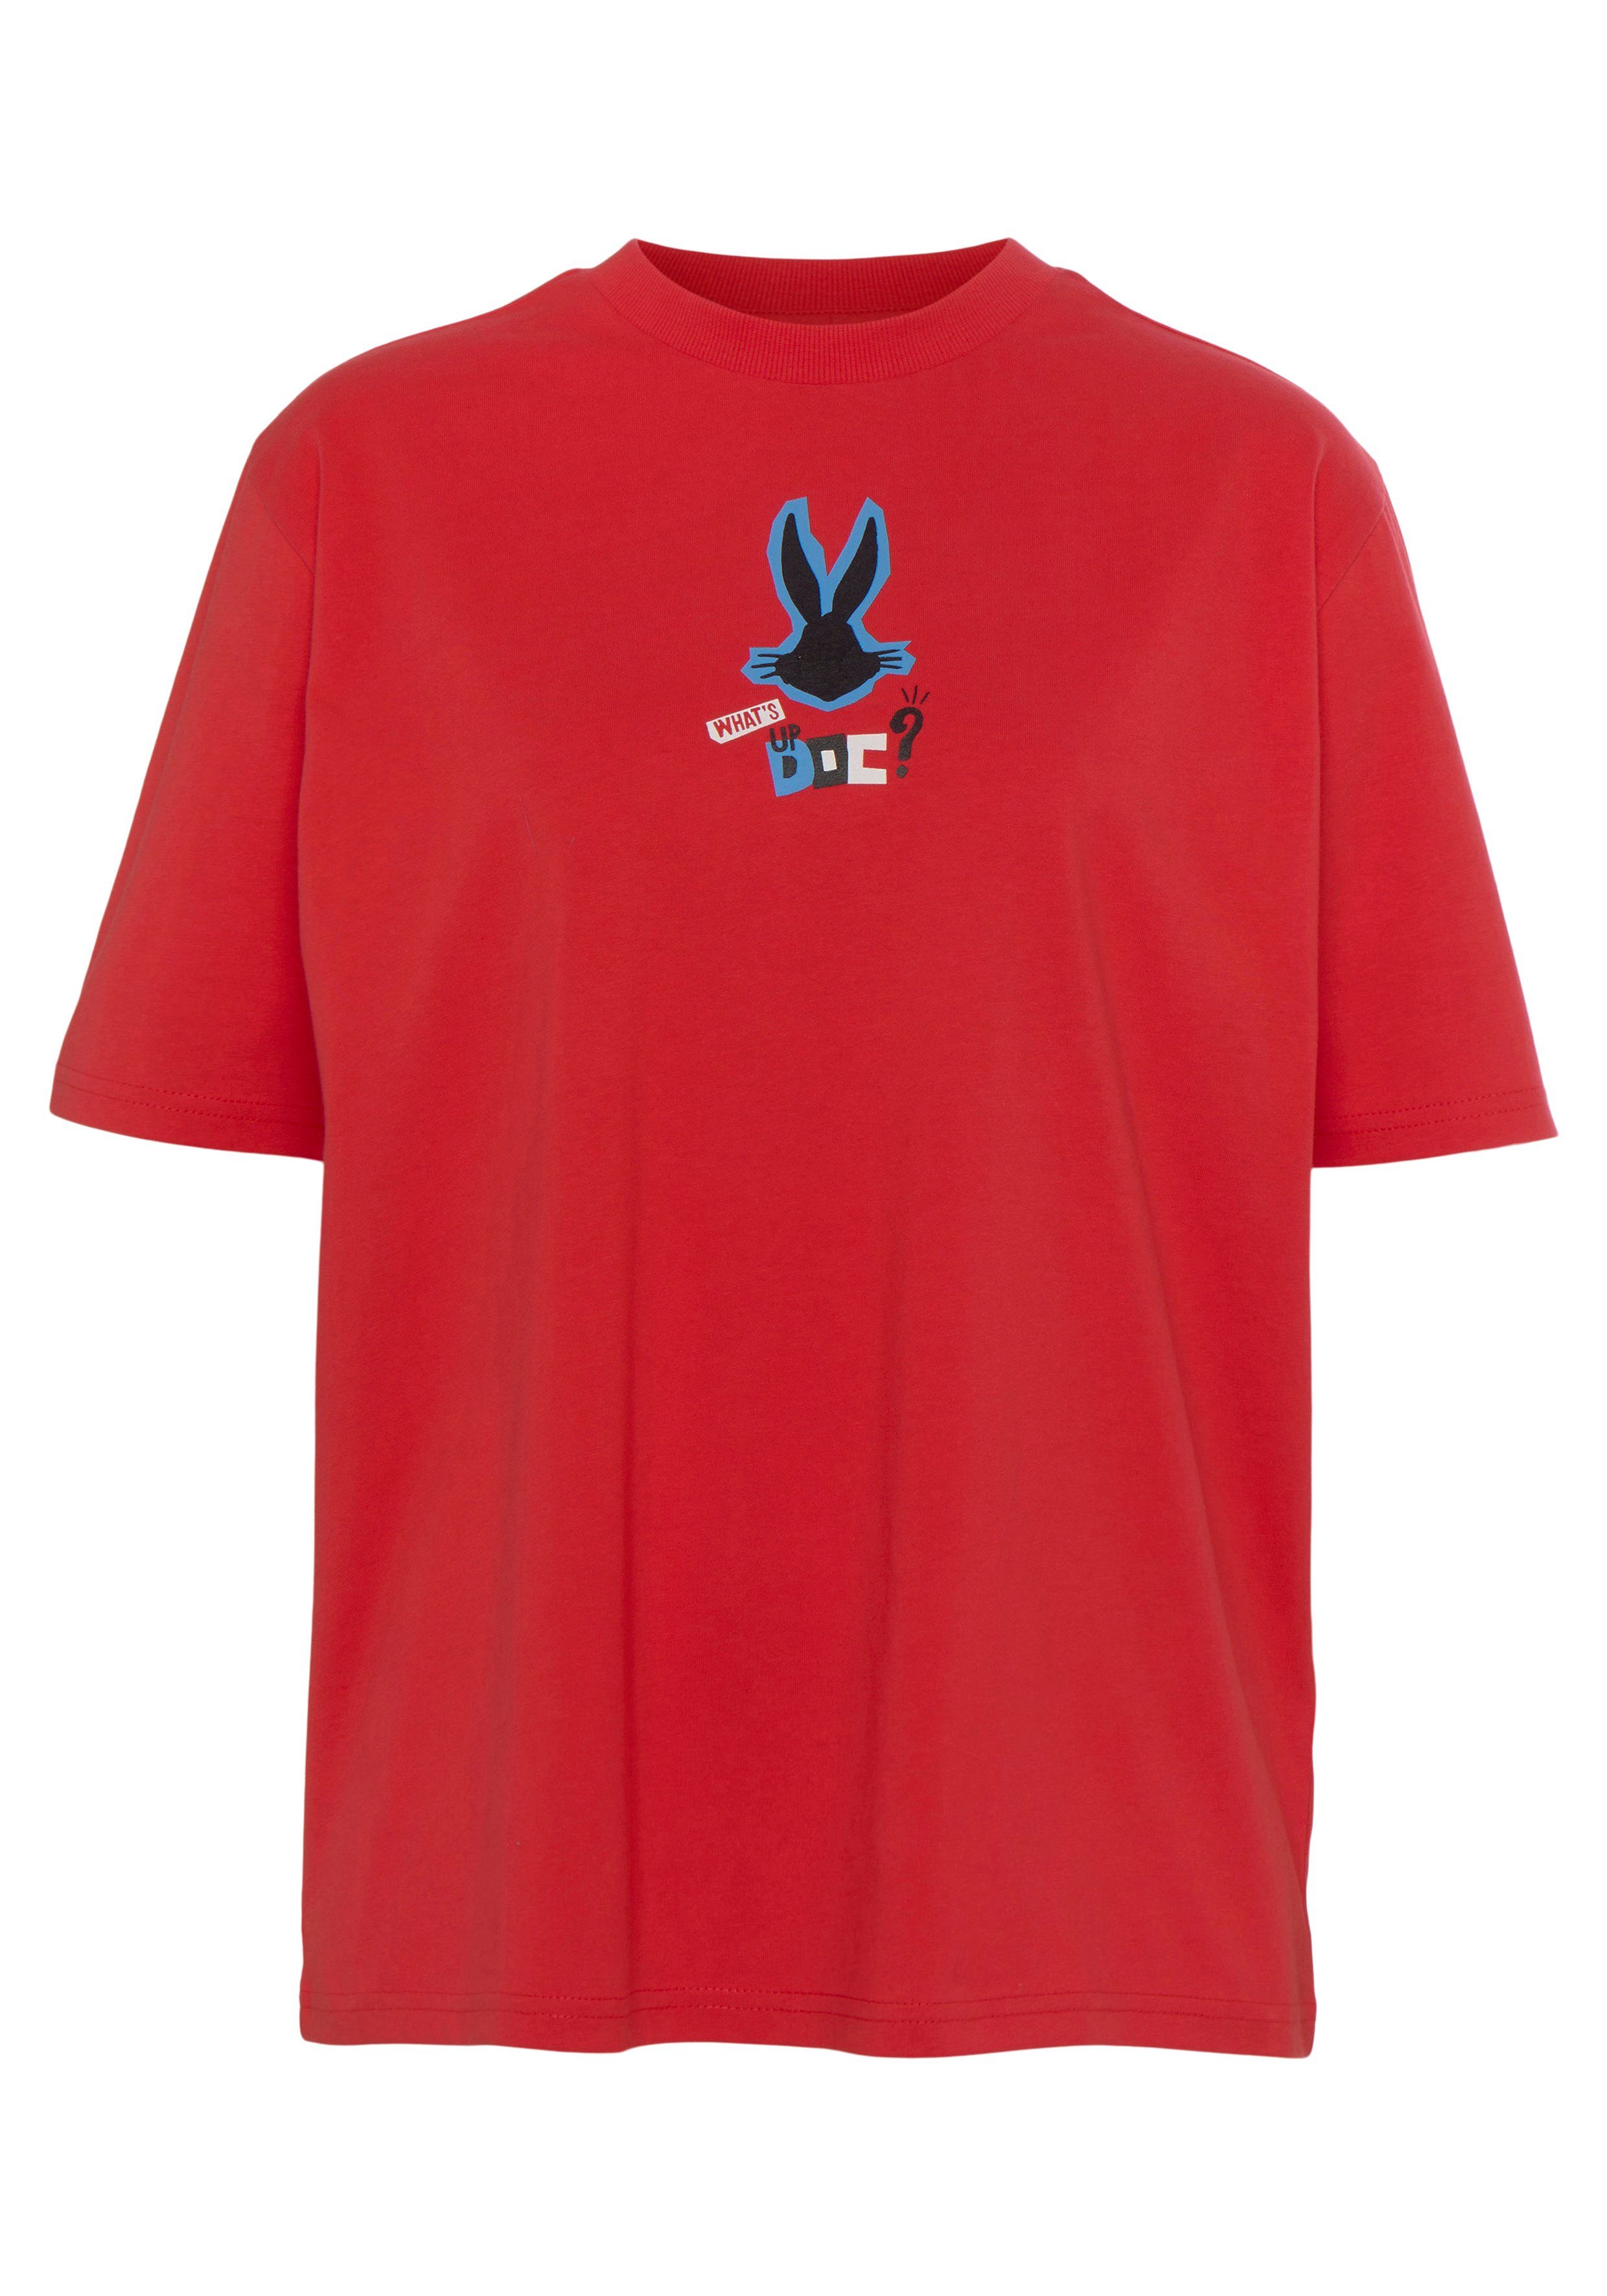 Capelli New T-Shirt Duck York Bunny Duffy mit Bugs Comic-Motiv mit